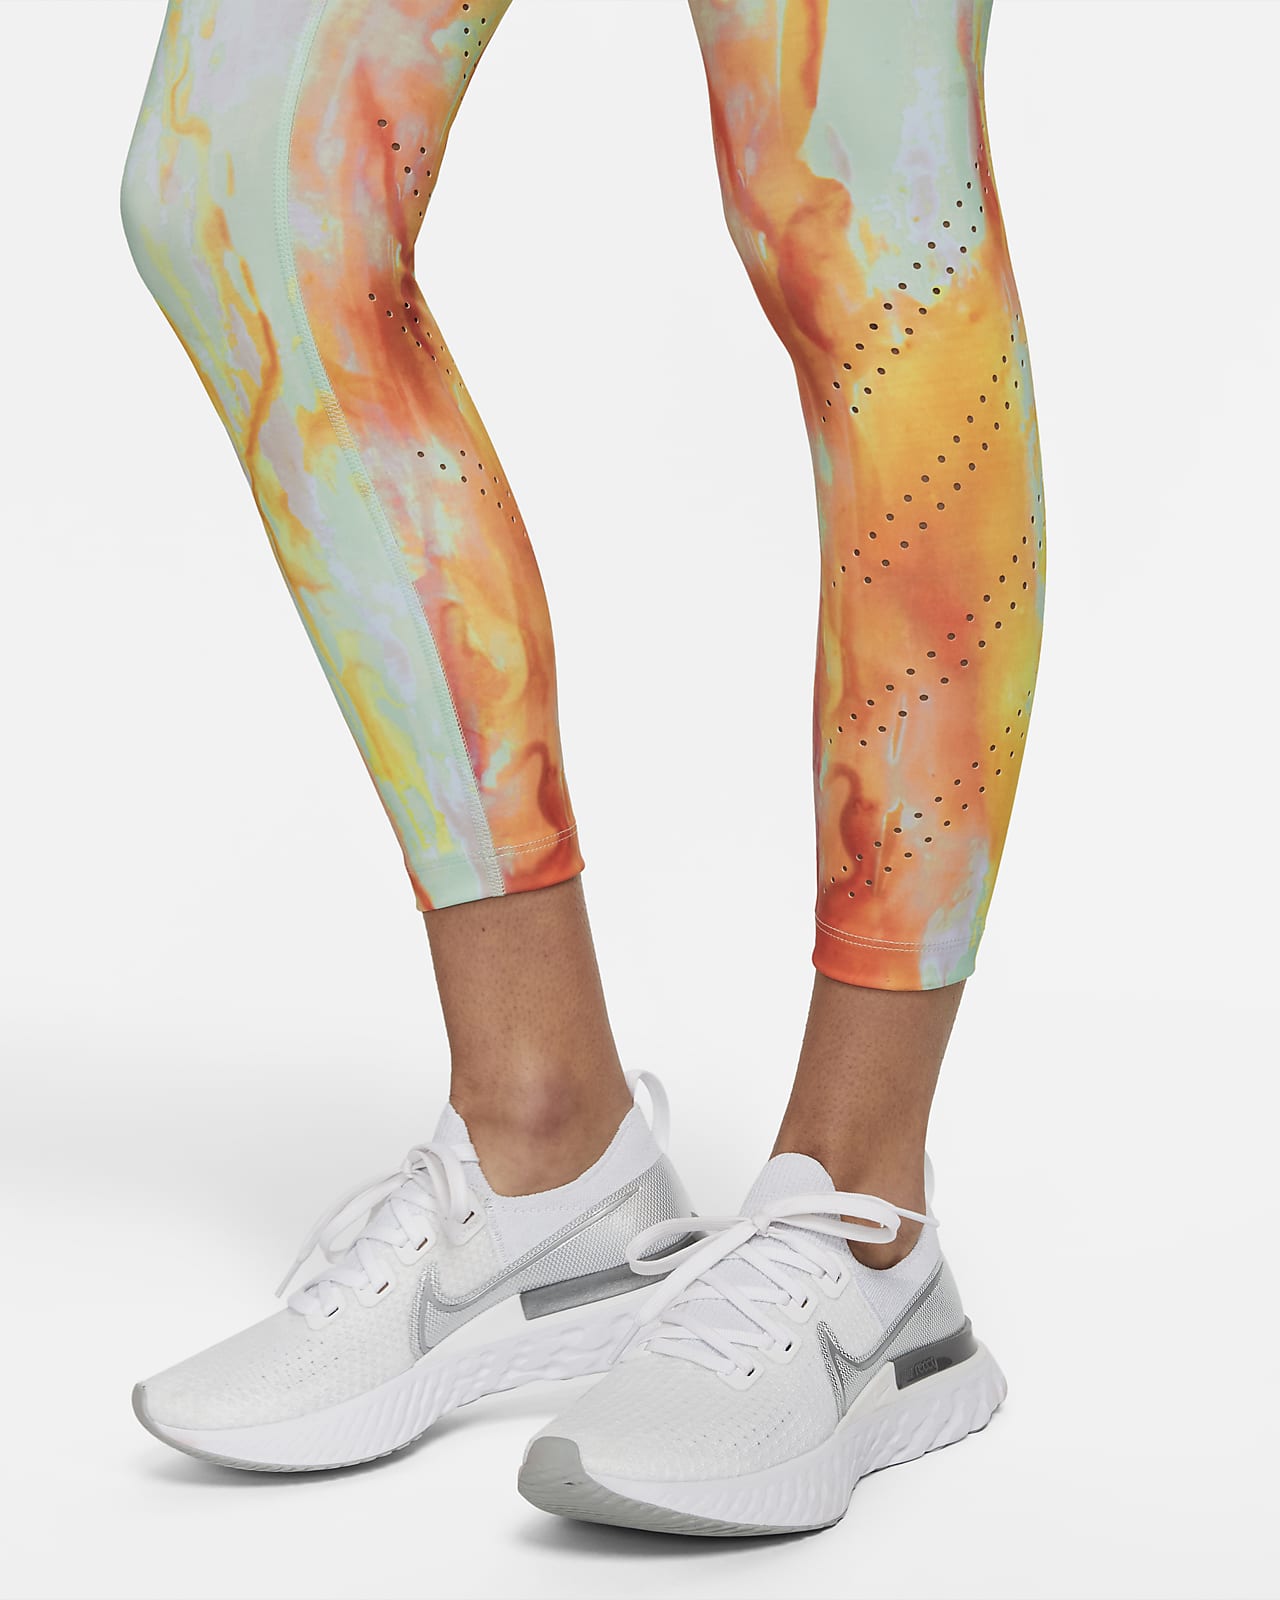 Nike Women's Epic Lux 27.5 Light Grey Mesh Running Tights (842923-012)  Size M